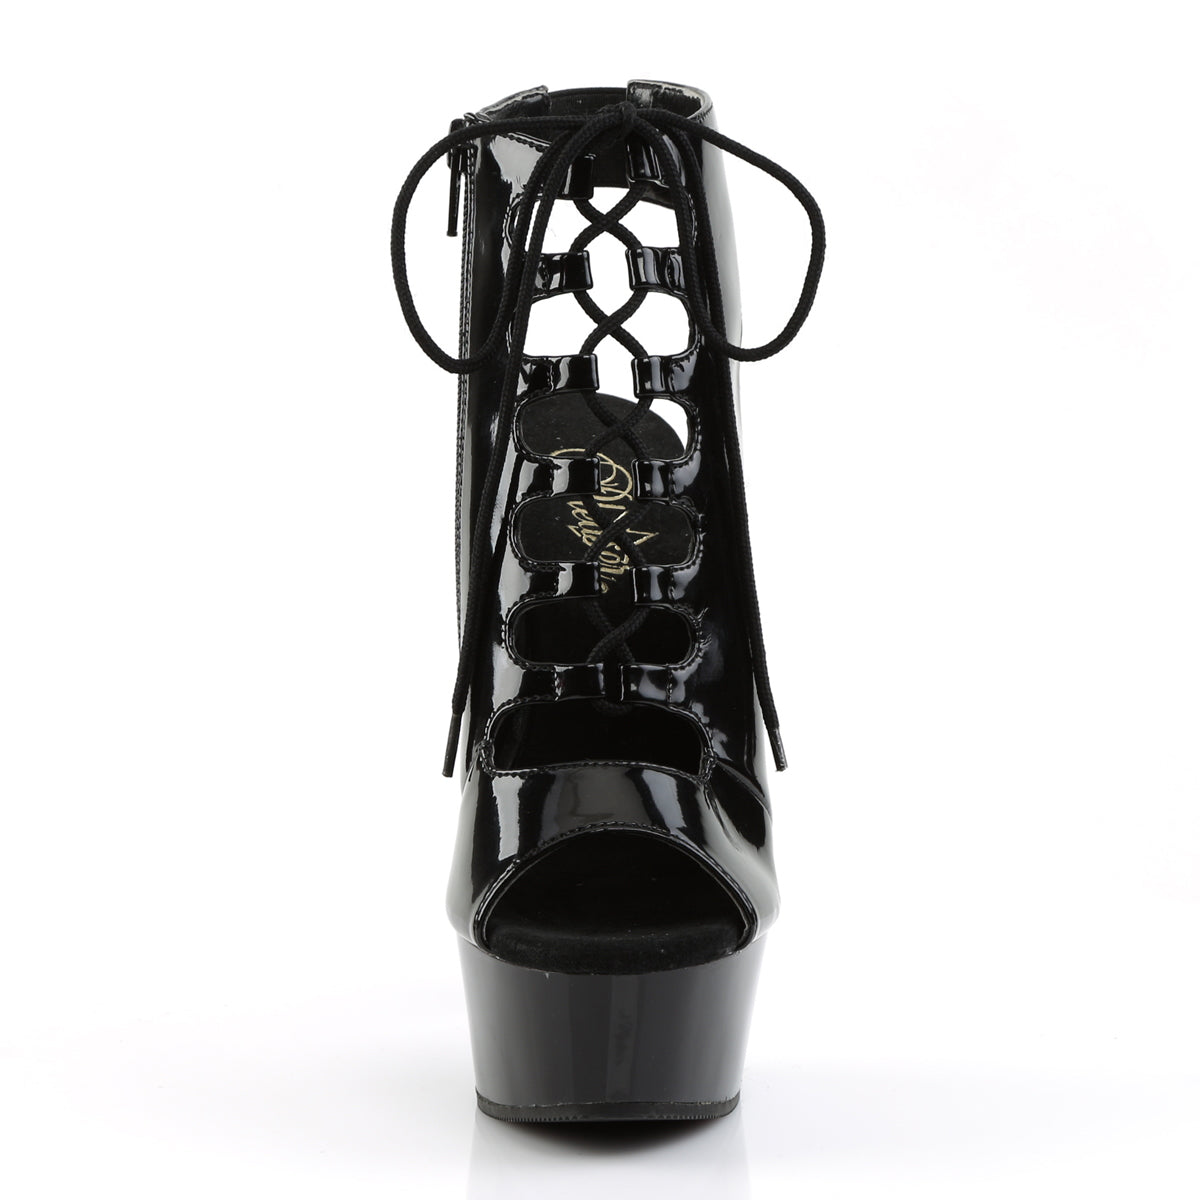 DELIGHT-600-20 Pleaser 6" Heel Black Pole Dancing Platforms-Pleaser- Sexy Shoes Alternative Footwear